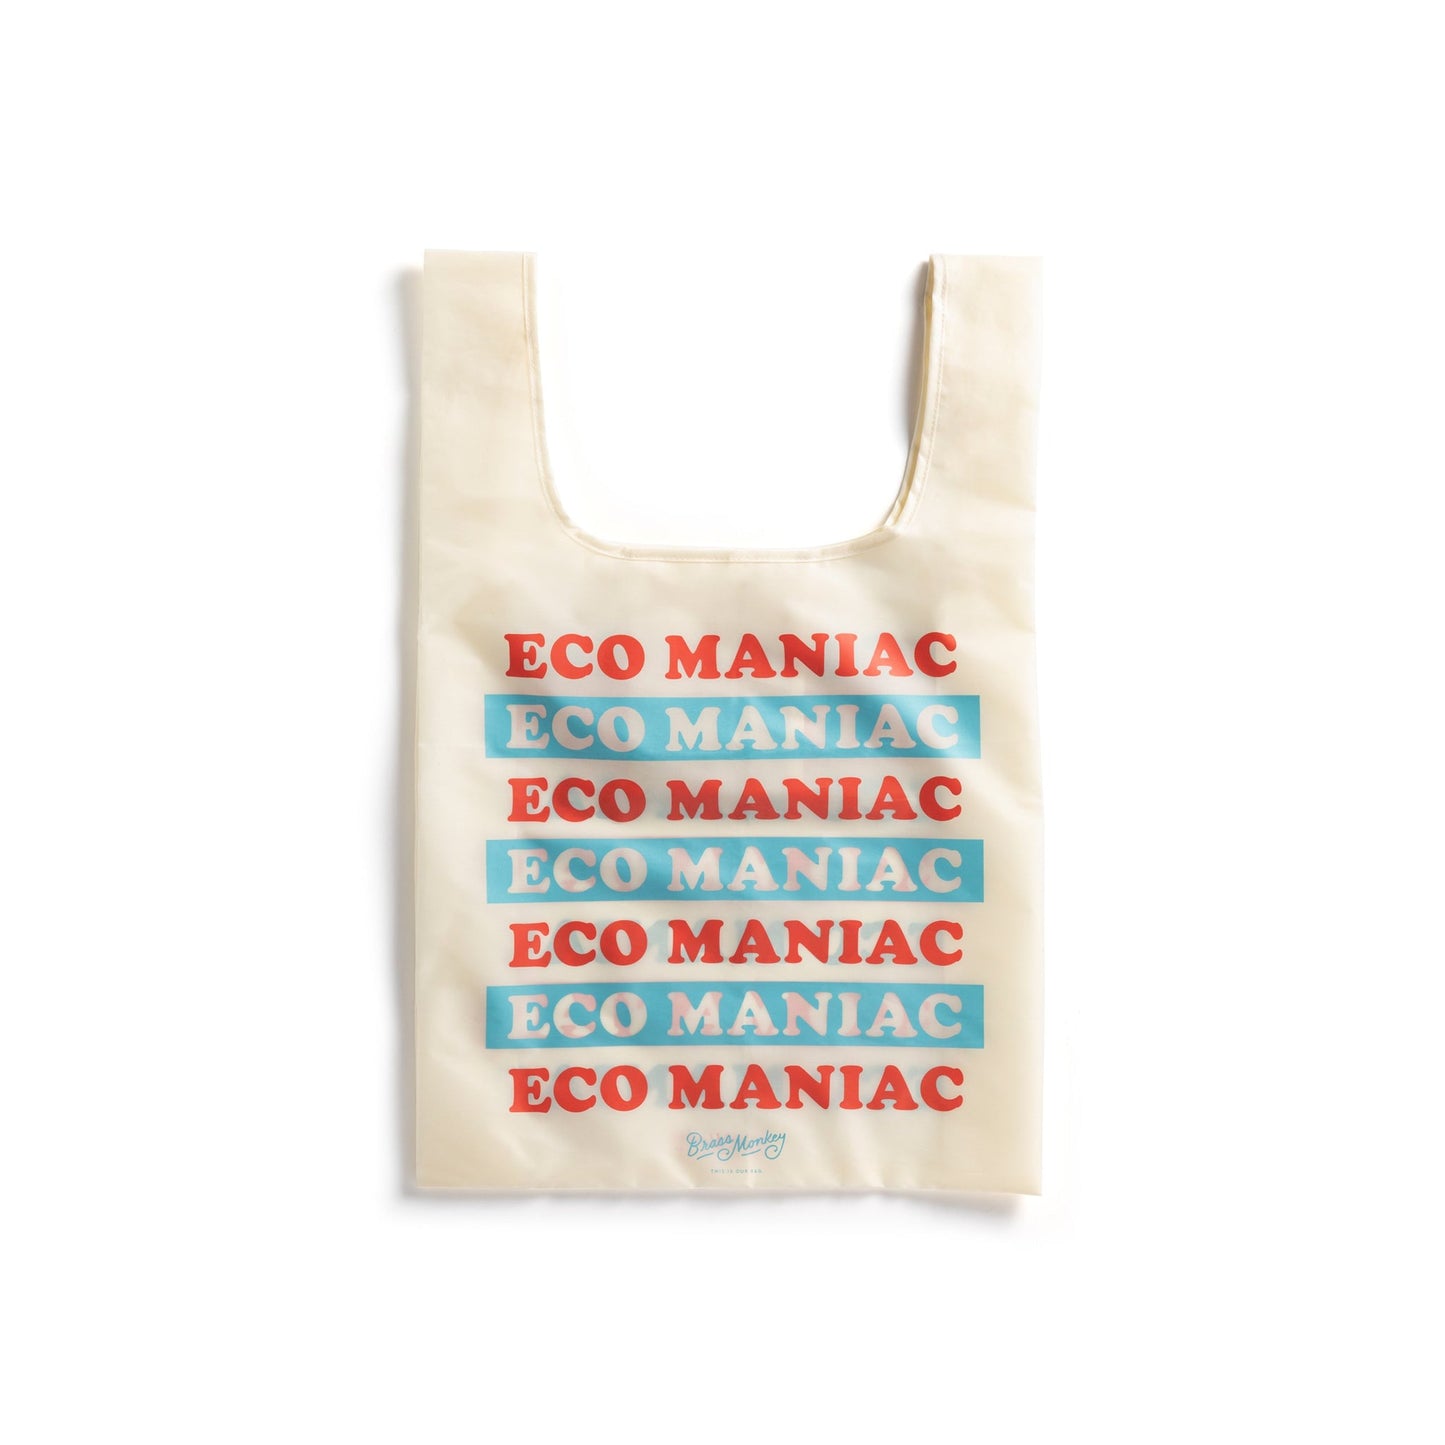 Stock image of Ego Maniac tote bag.